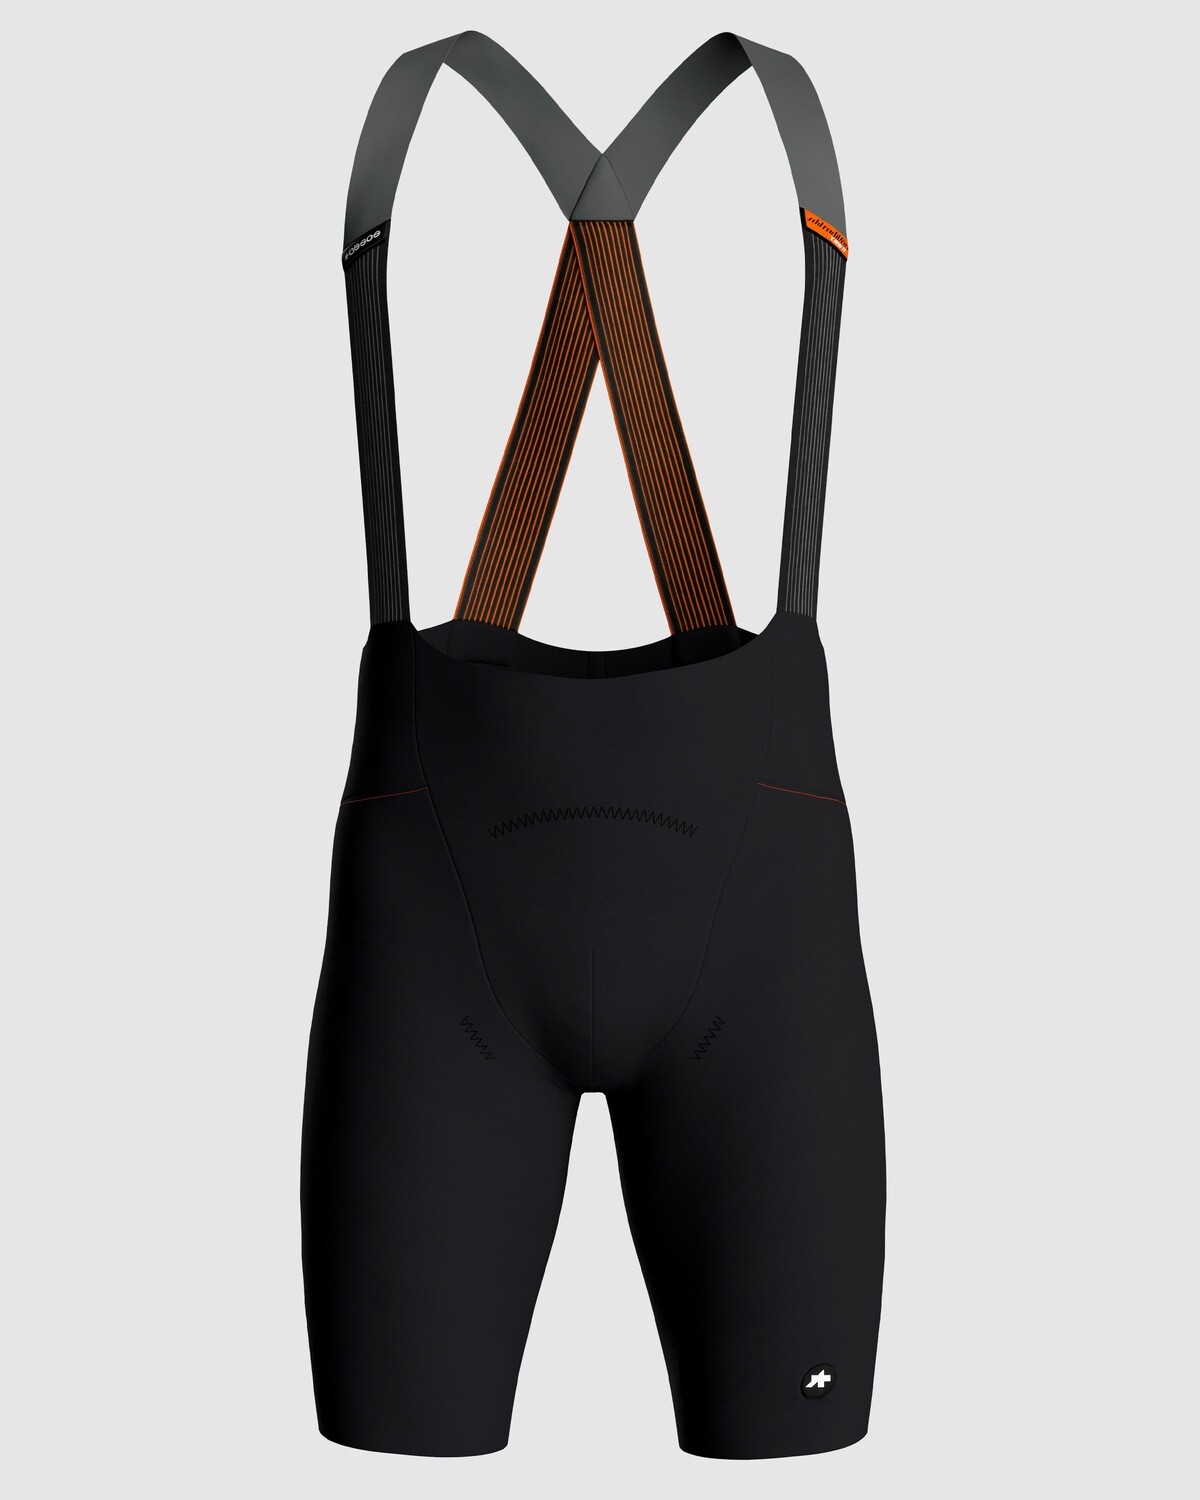 Assos Equipe RS Bib Shorts S11 blackSeries, Size: S